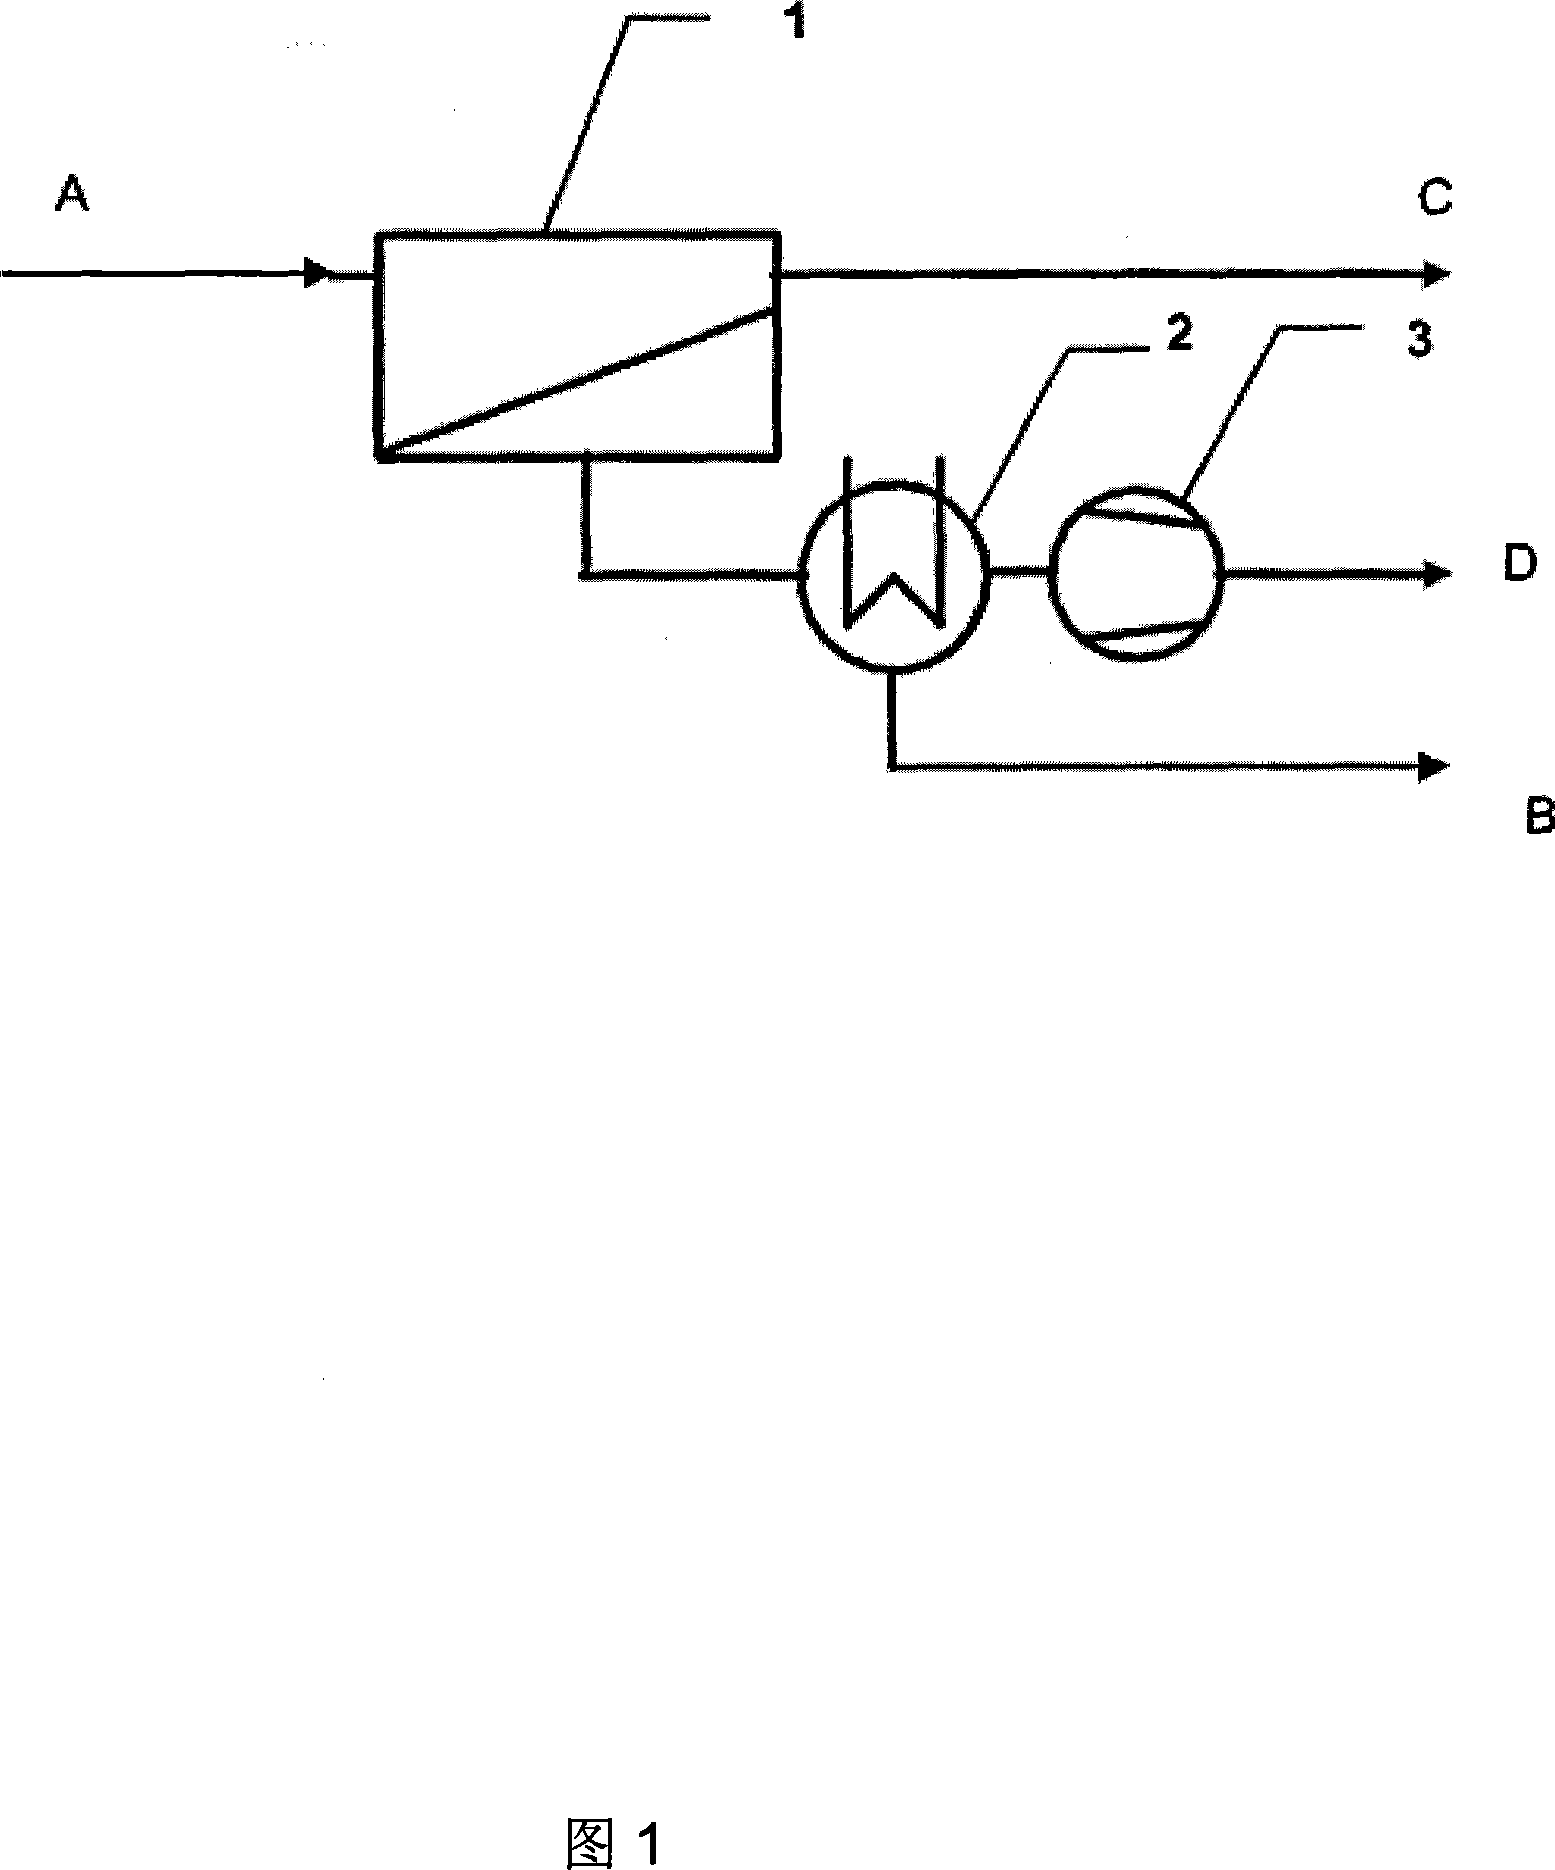 Method for separating dimethyl carbonate and methanol azeotrope